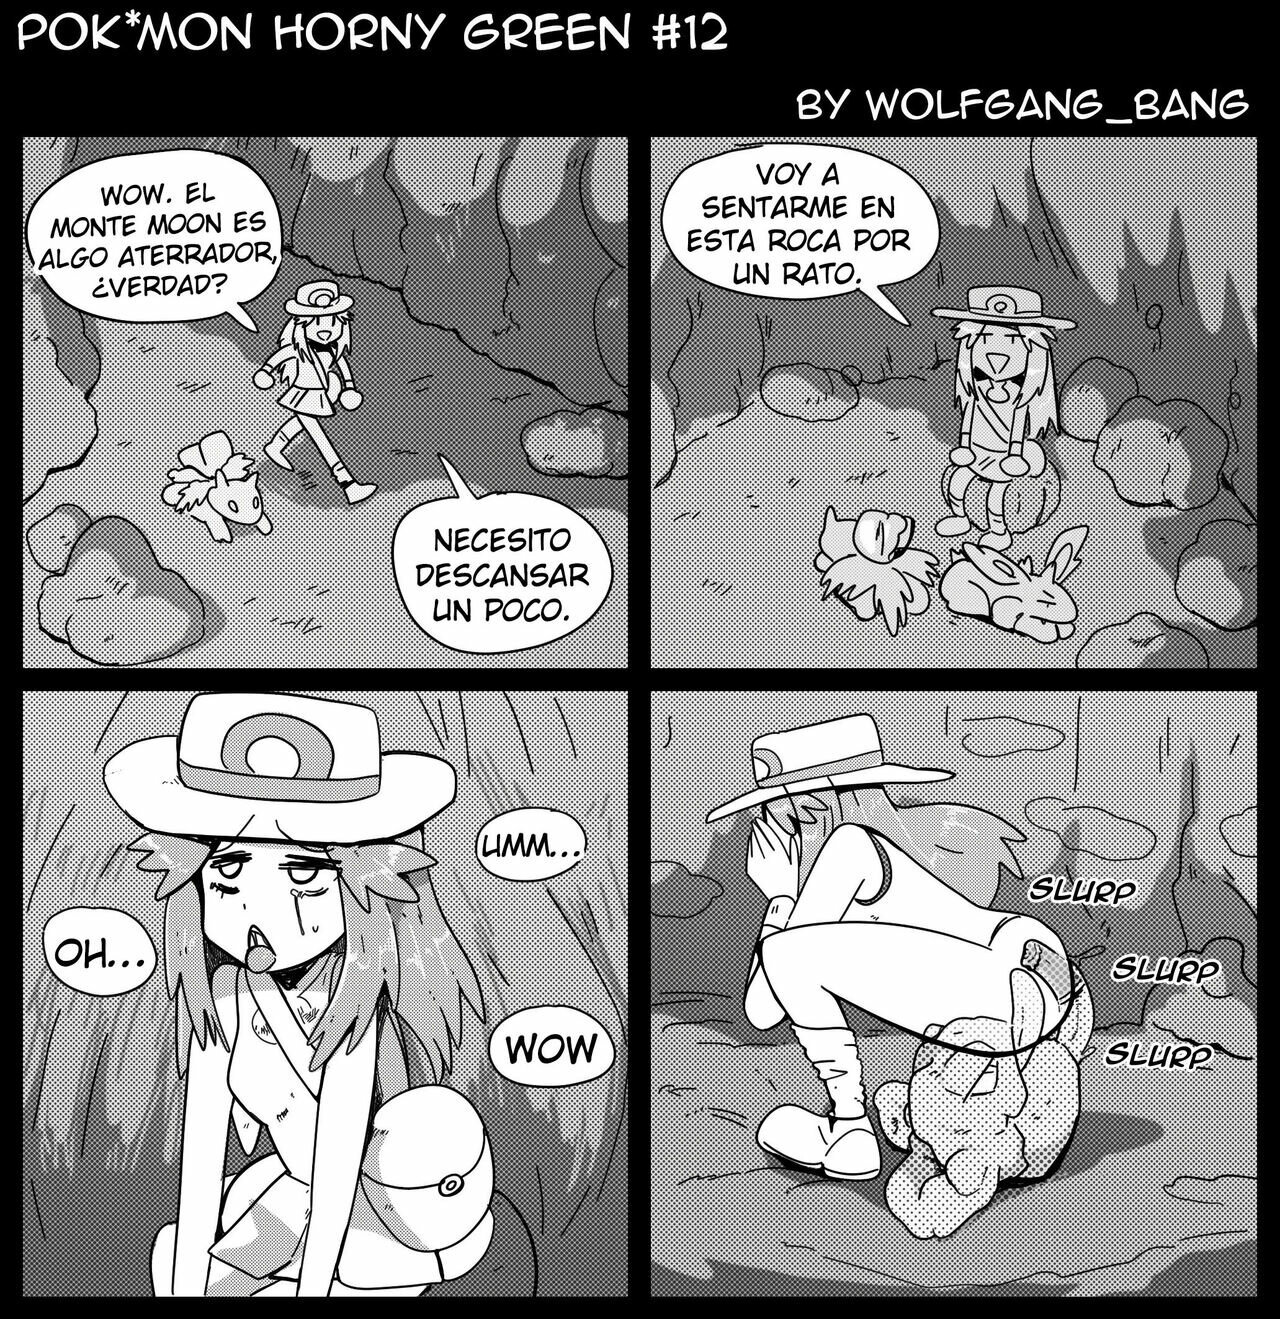 Pokemon HornyGreen by Wolfrad Senpai - 12